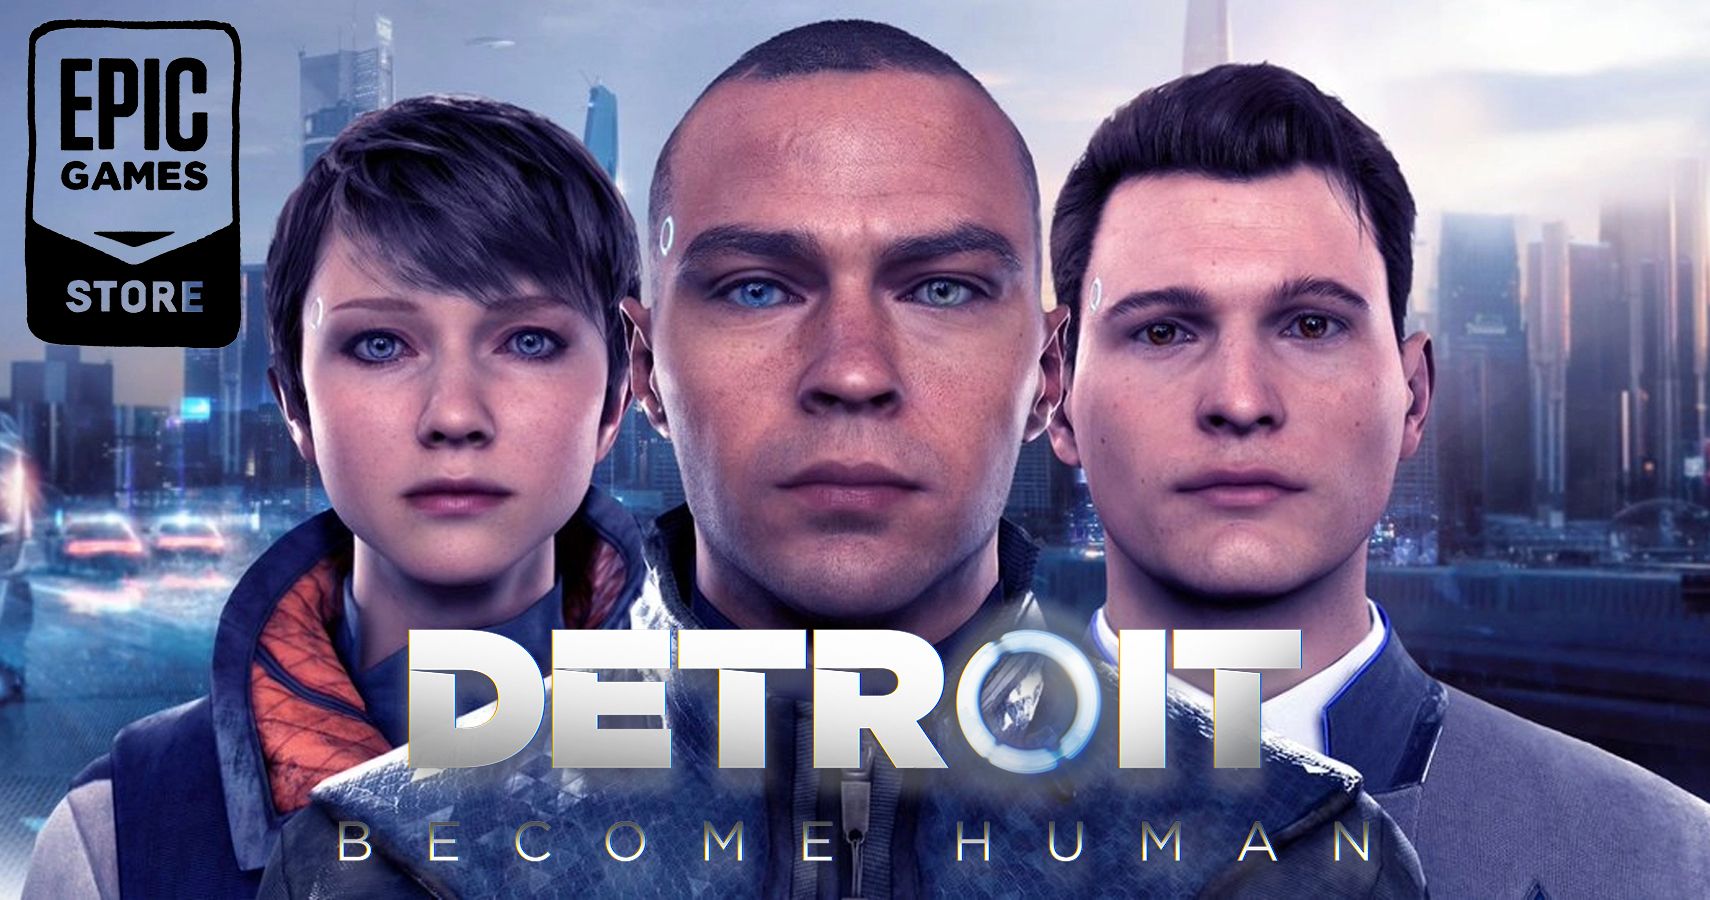 Detroit: Become Human, Beyond, Heavy Rain Steam Release Dates